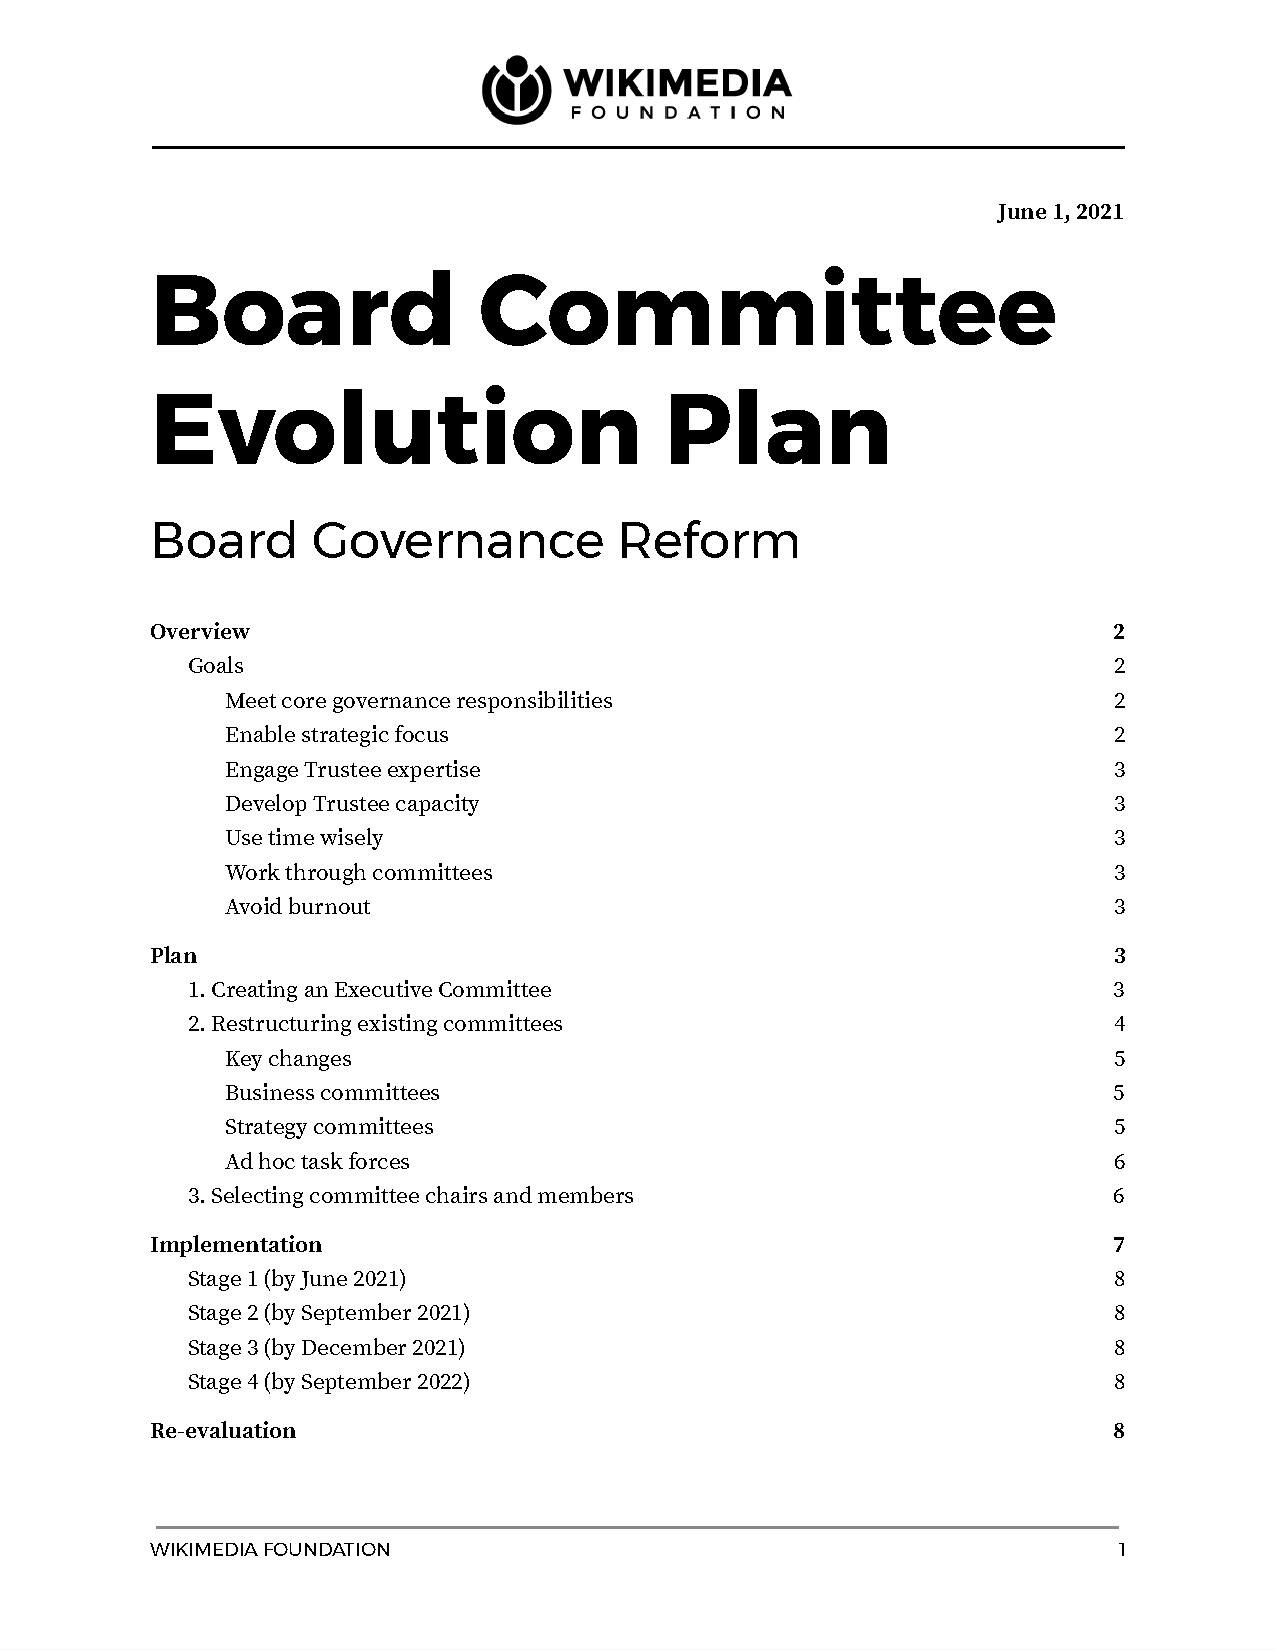 Committee Evolution Plan